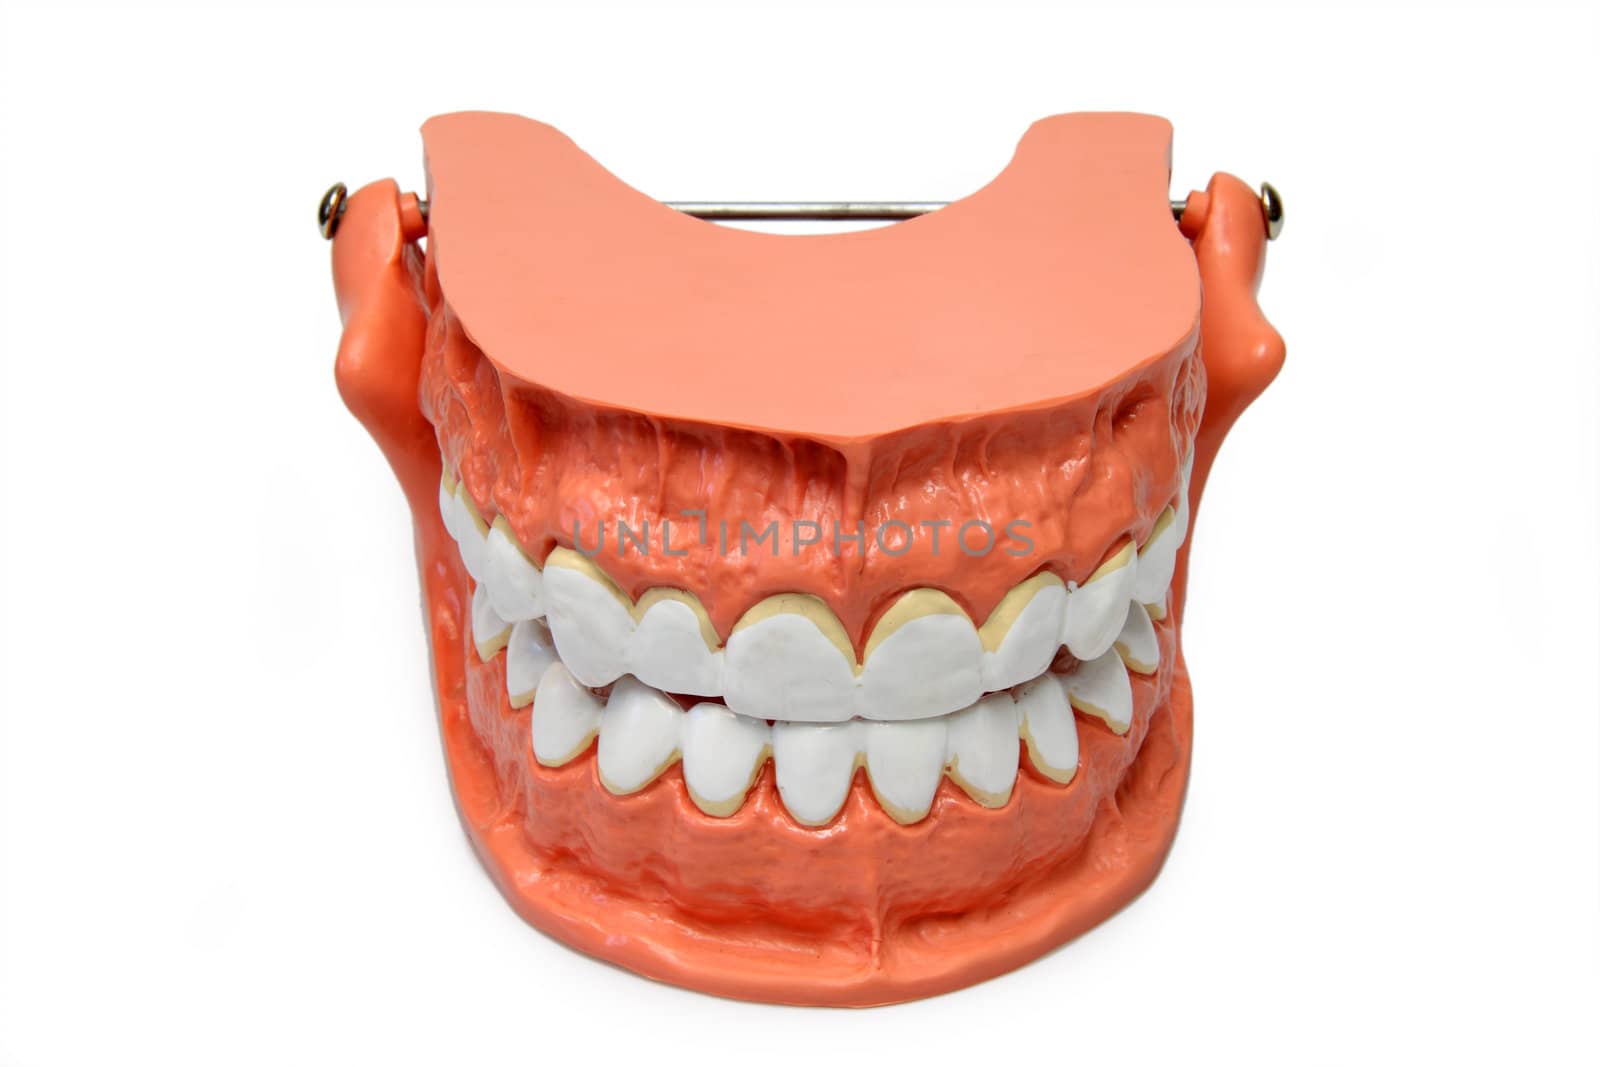 Teeth model by Colour